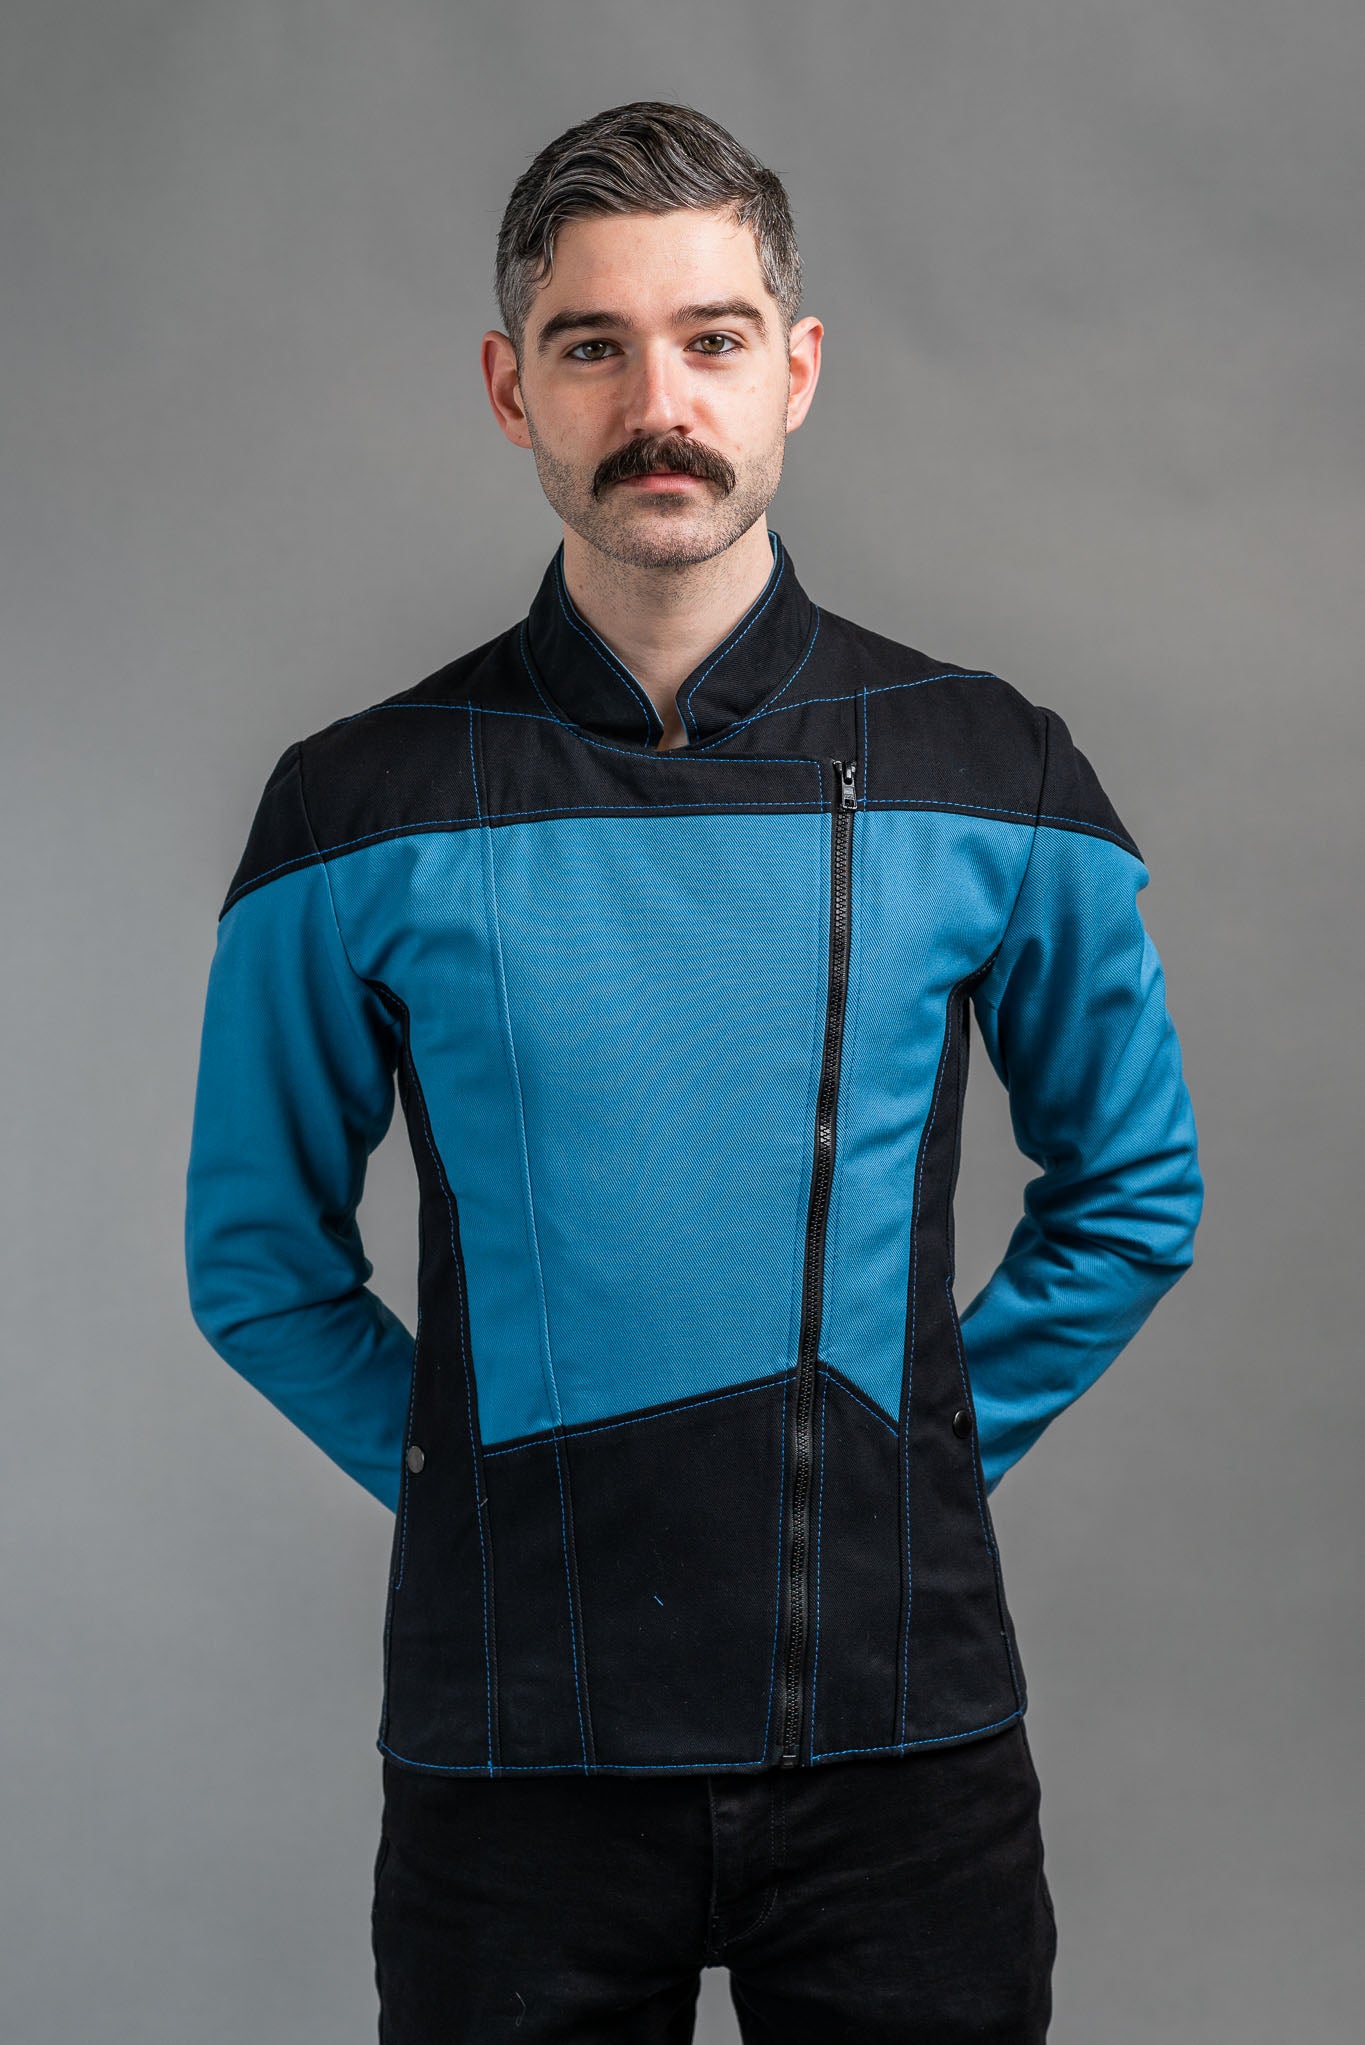 Starfleet 2364 - Sciences Blue [Mens]